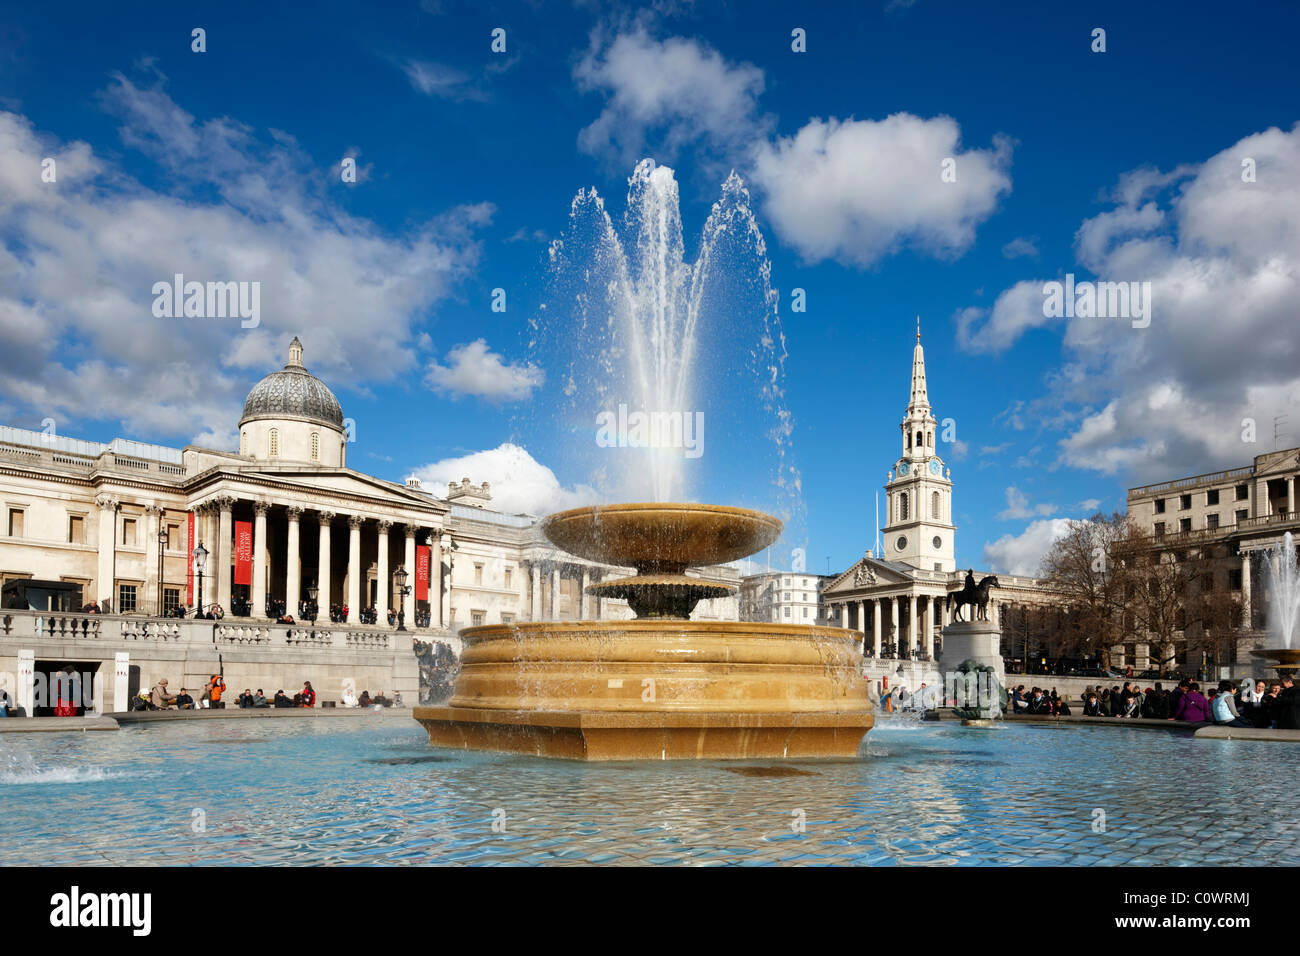 Fountains at Trafalgar Square, Central London Stock Photo